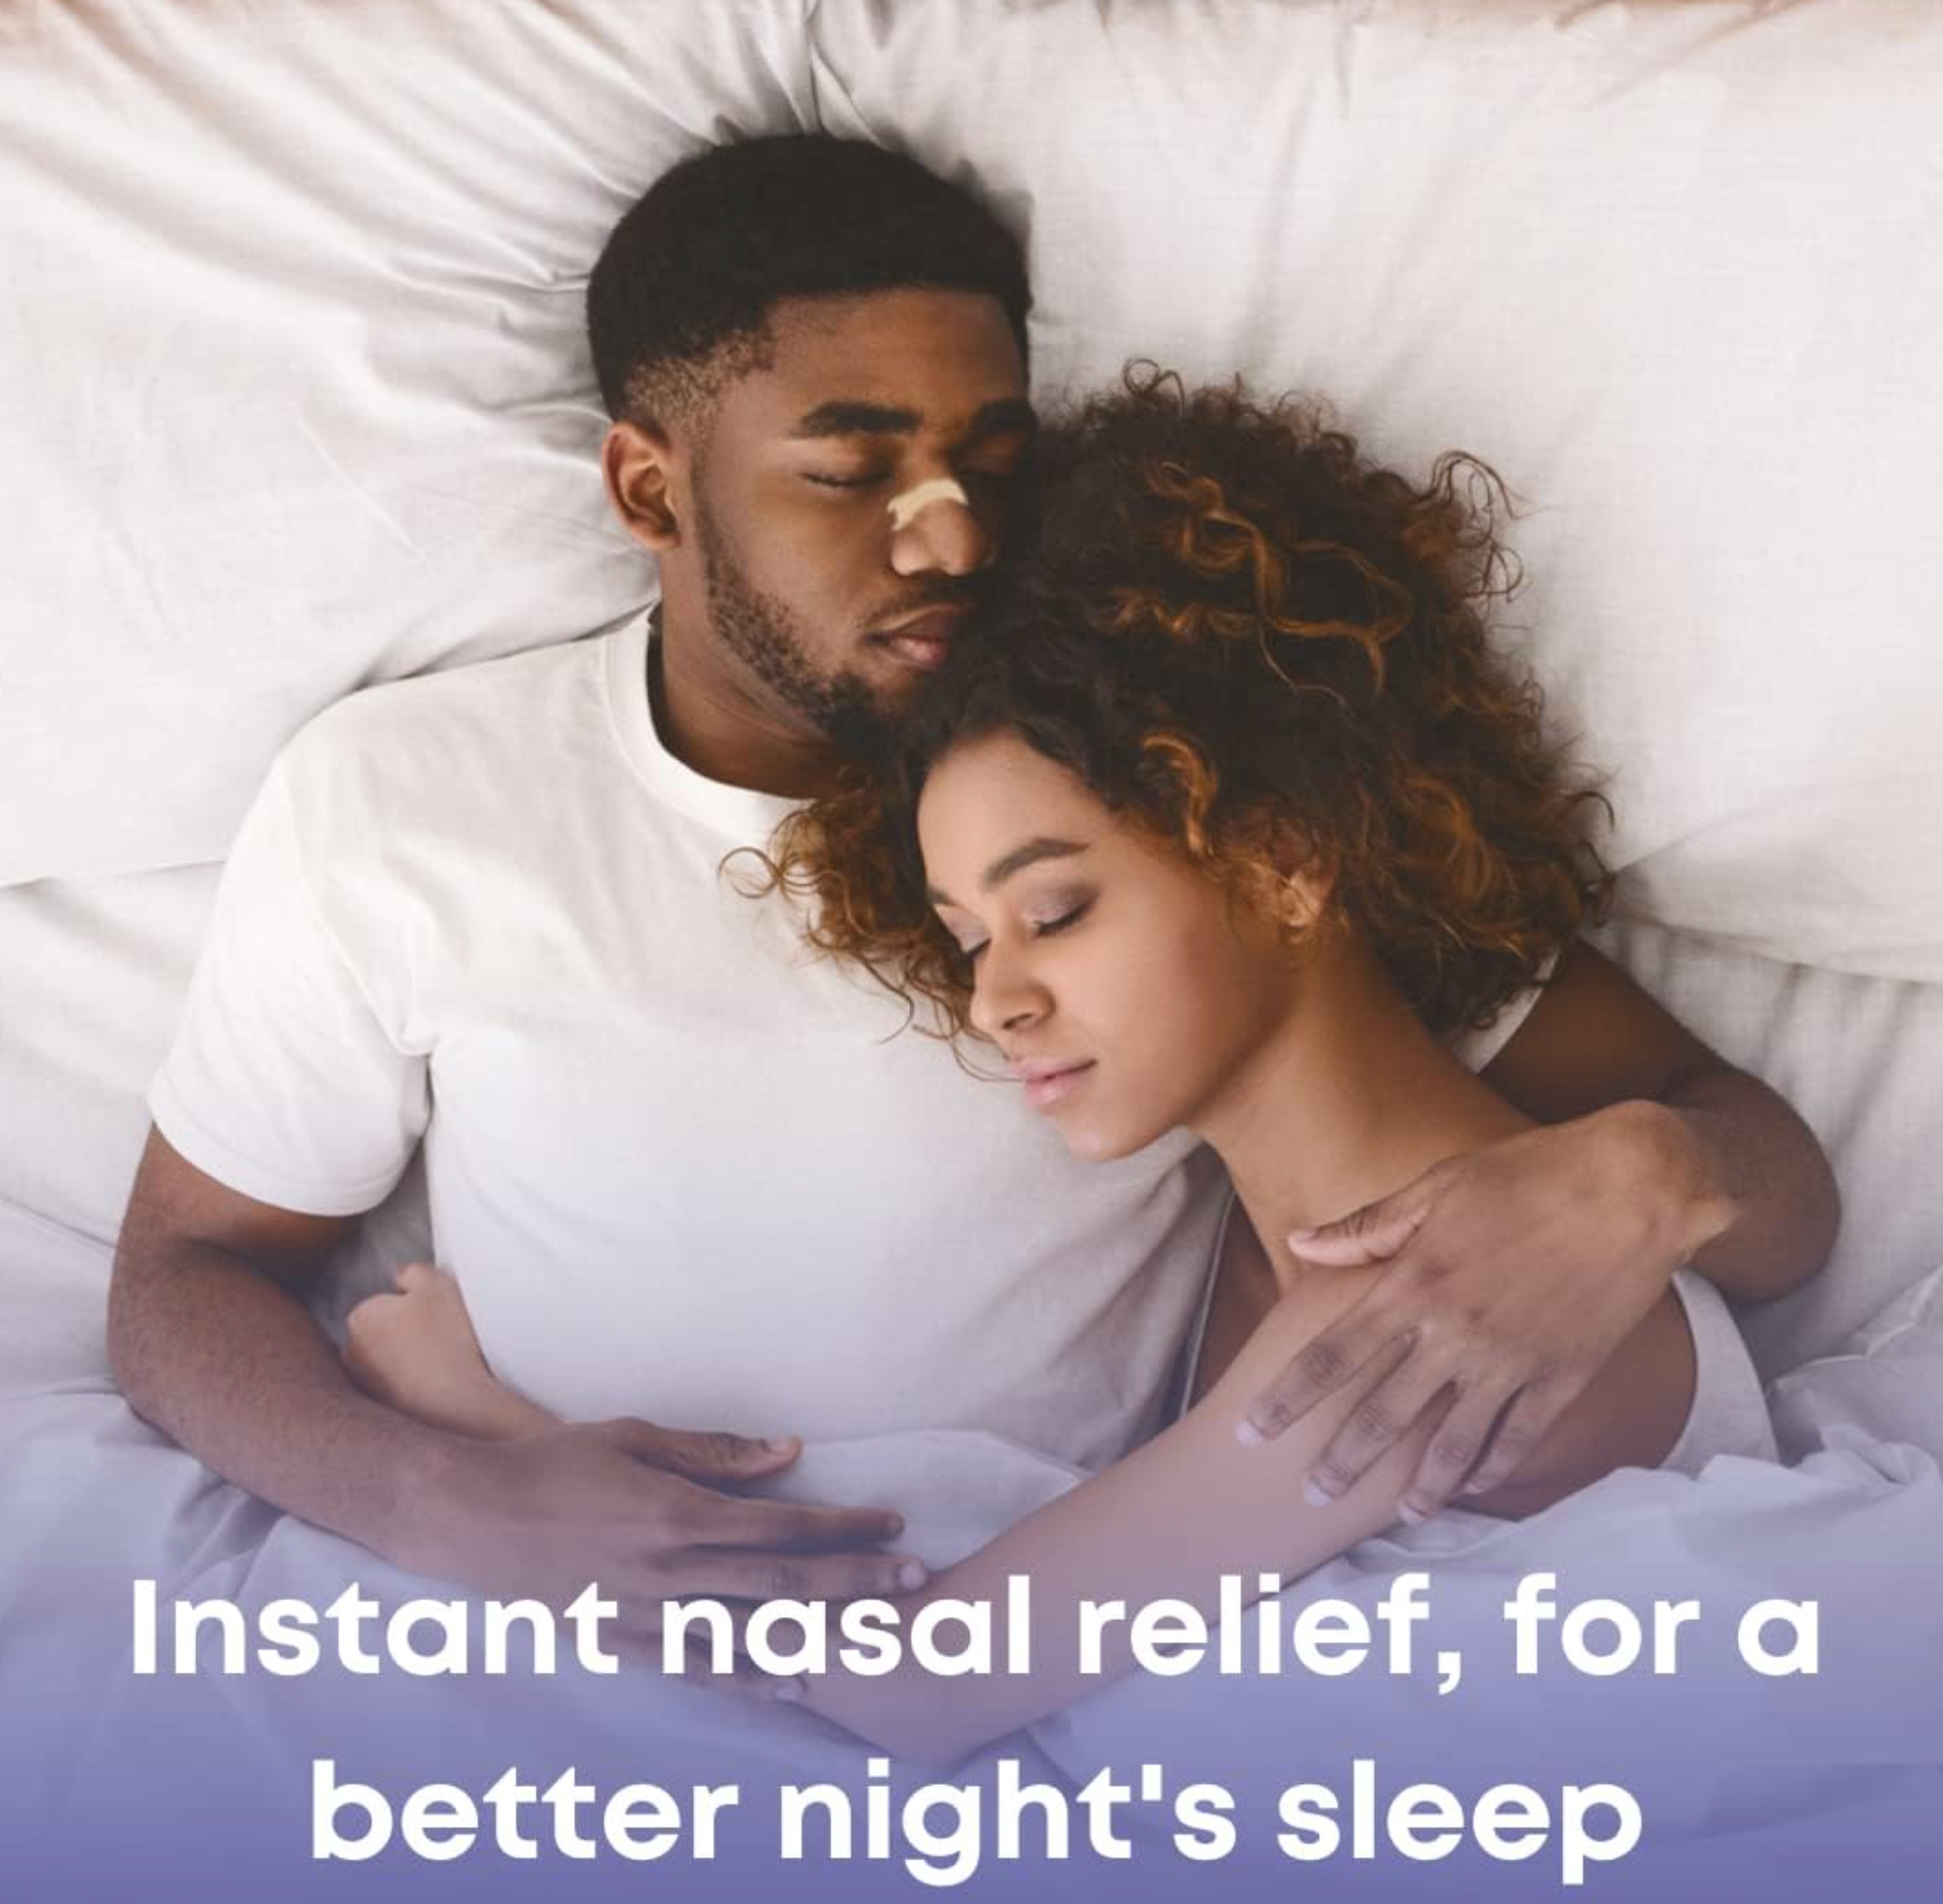 Sleepeze Remedies x30 Medium Nasal Strips, Anti Snoring Breathing Aids